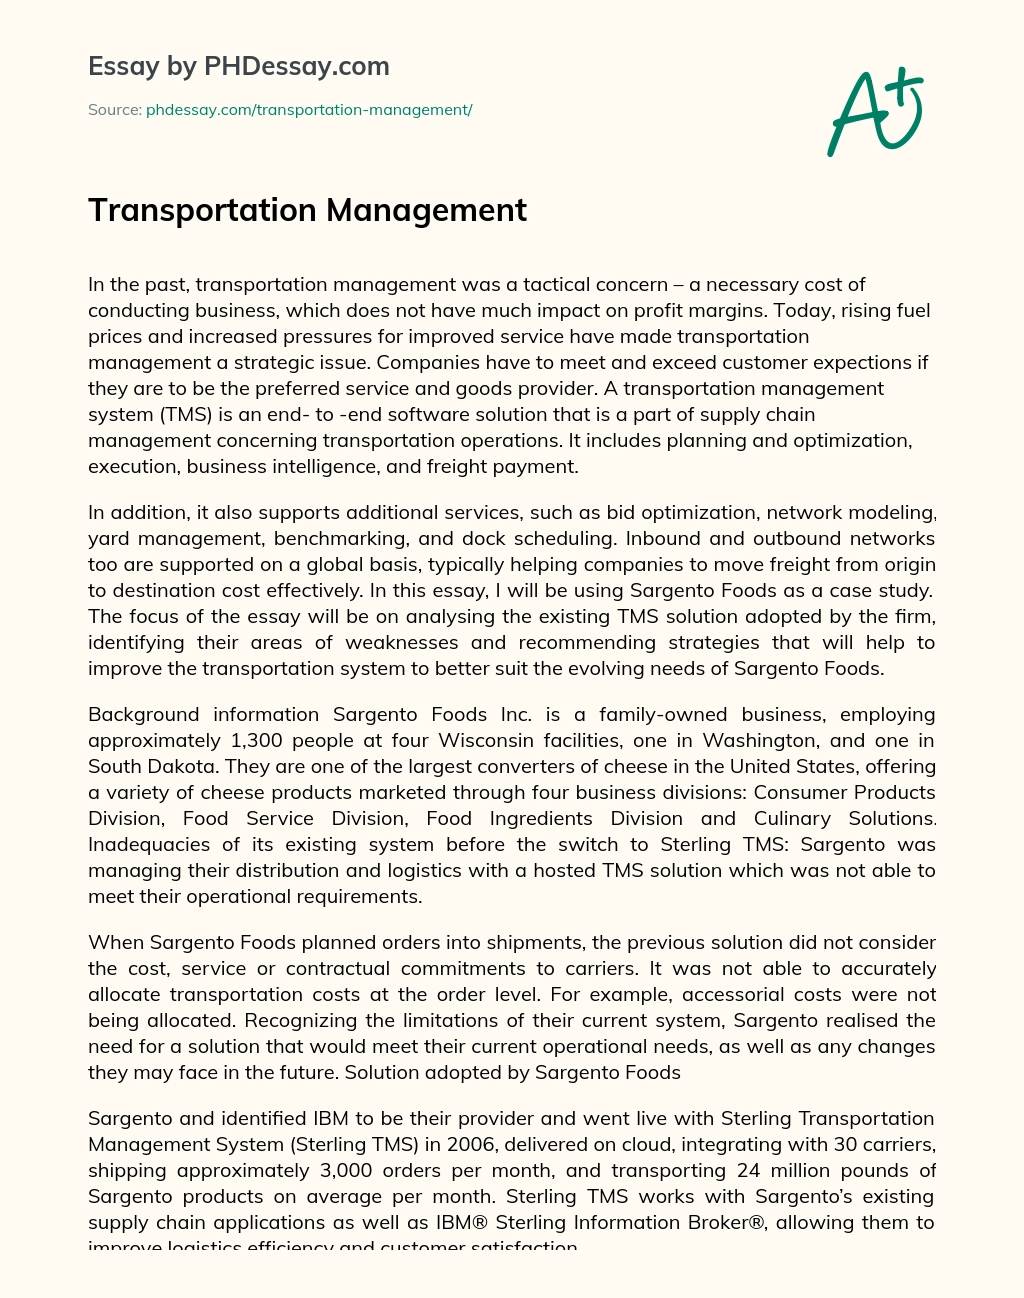 Transportation Management essay